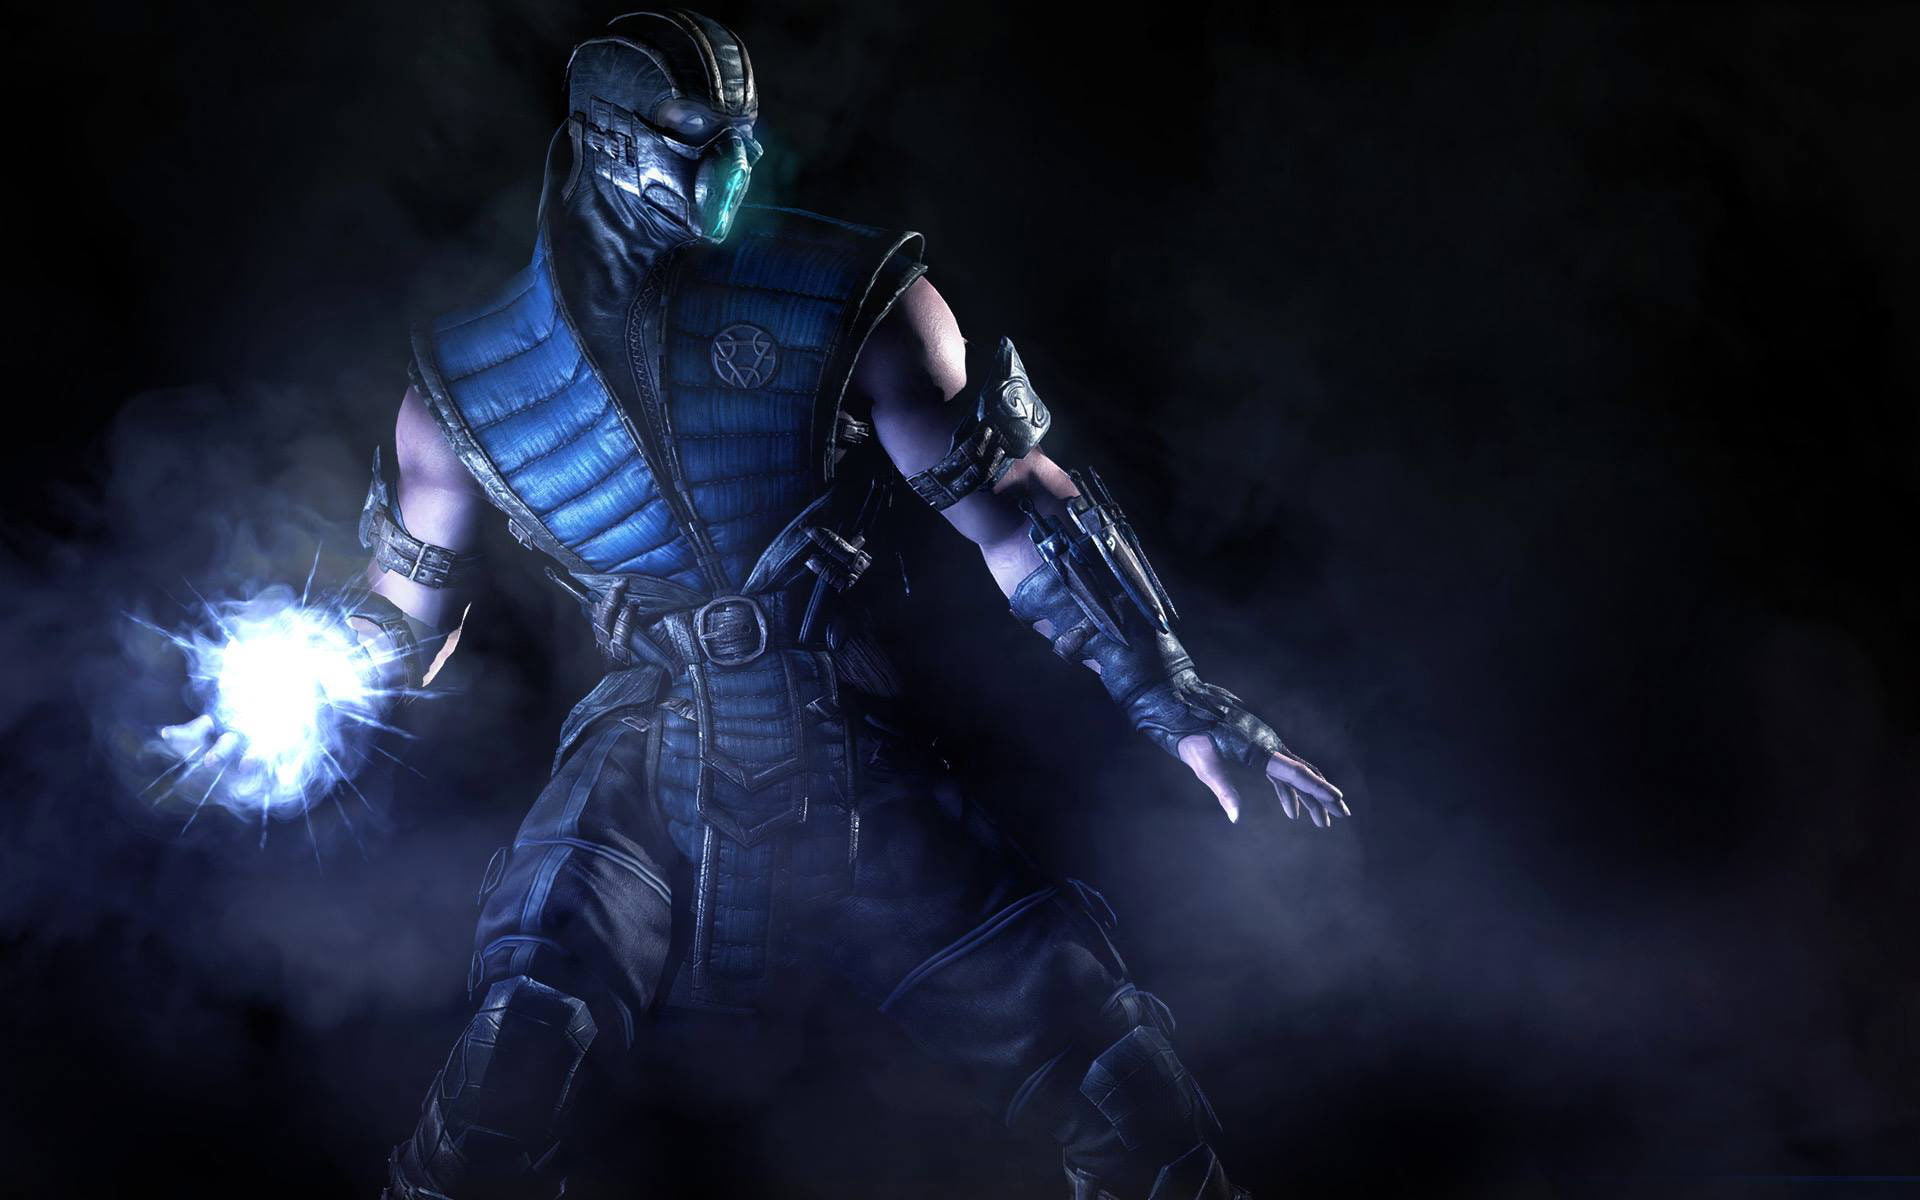 Sub Zero Mortal Kombat X, weapon, night, gun, security, protection